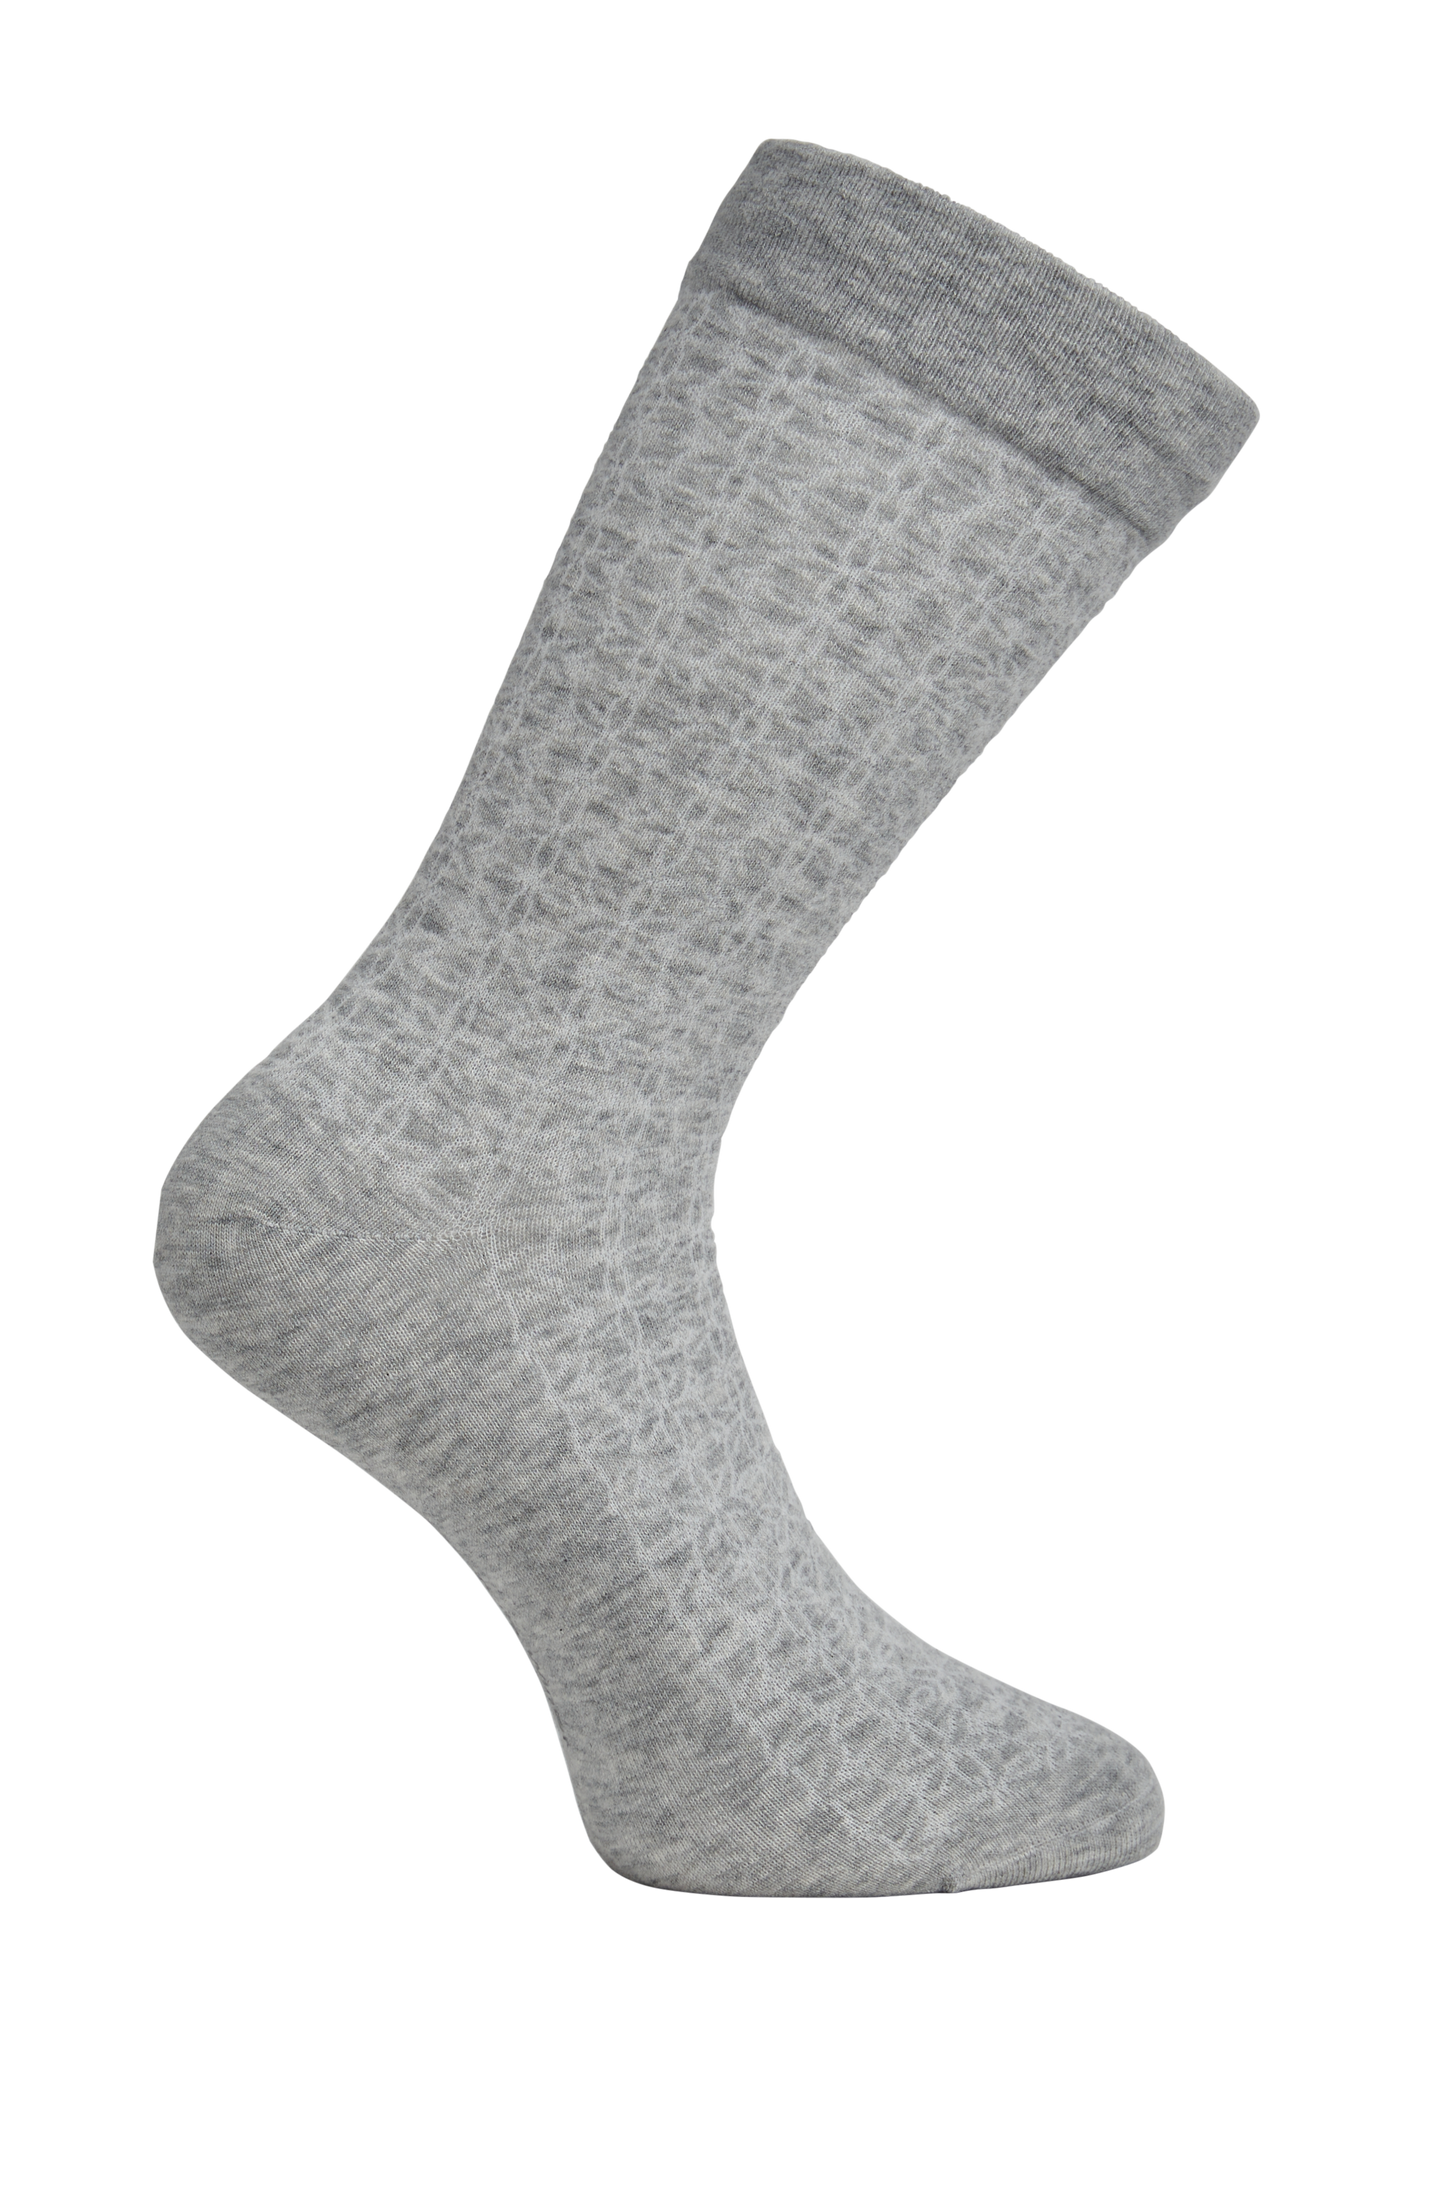 Side of Simon de Winter Women's Circulation Comfort Cotton Crew Socks in Cool Grey Marle